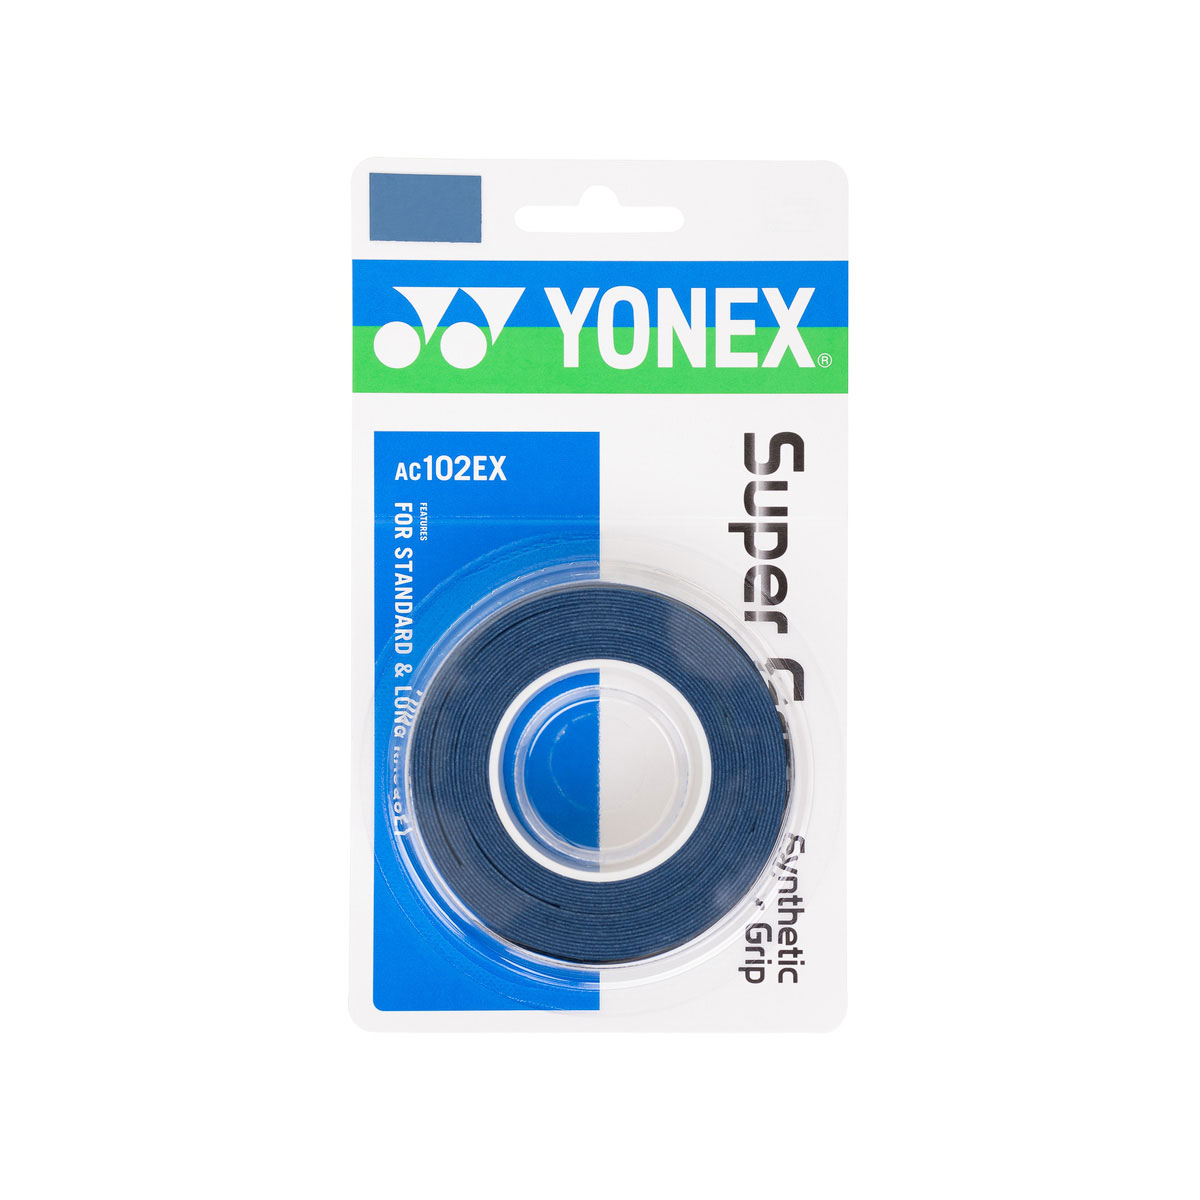 YONEX Super Grap Synthetic Over Grip 3 Stk. - Zitrus grün